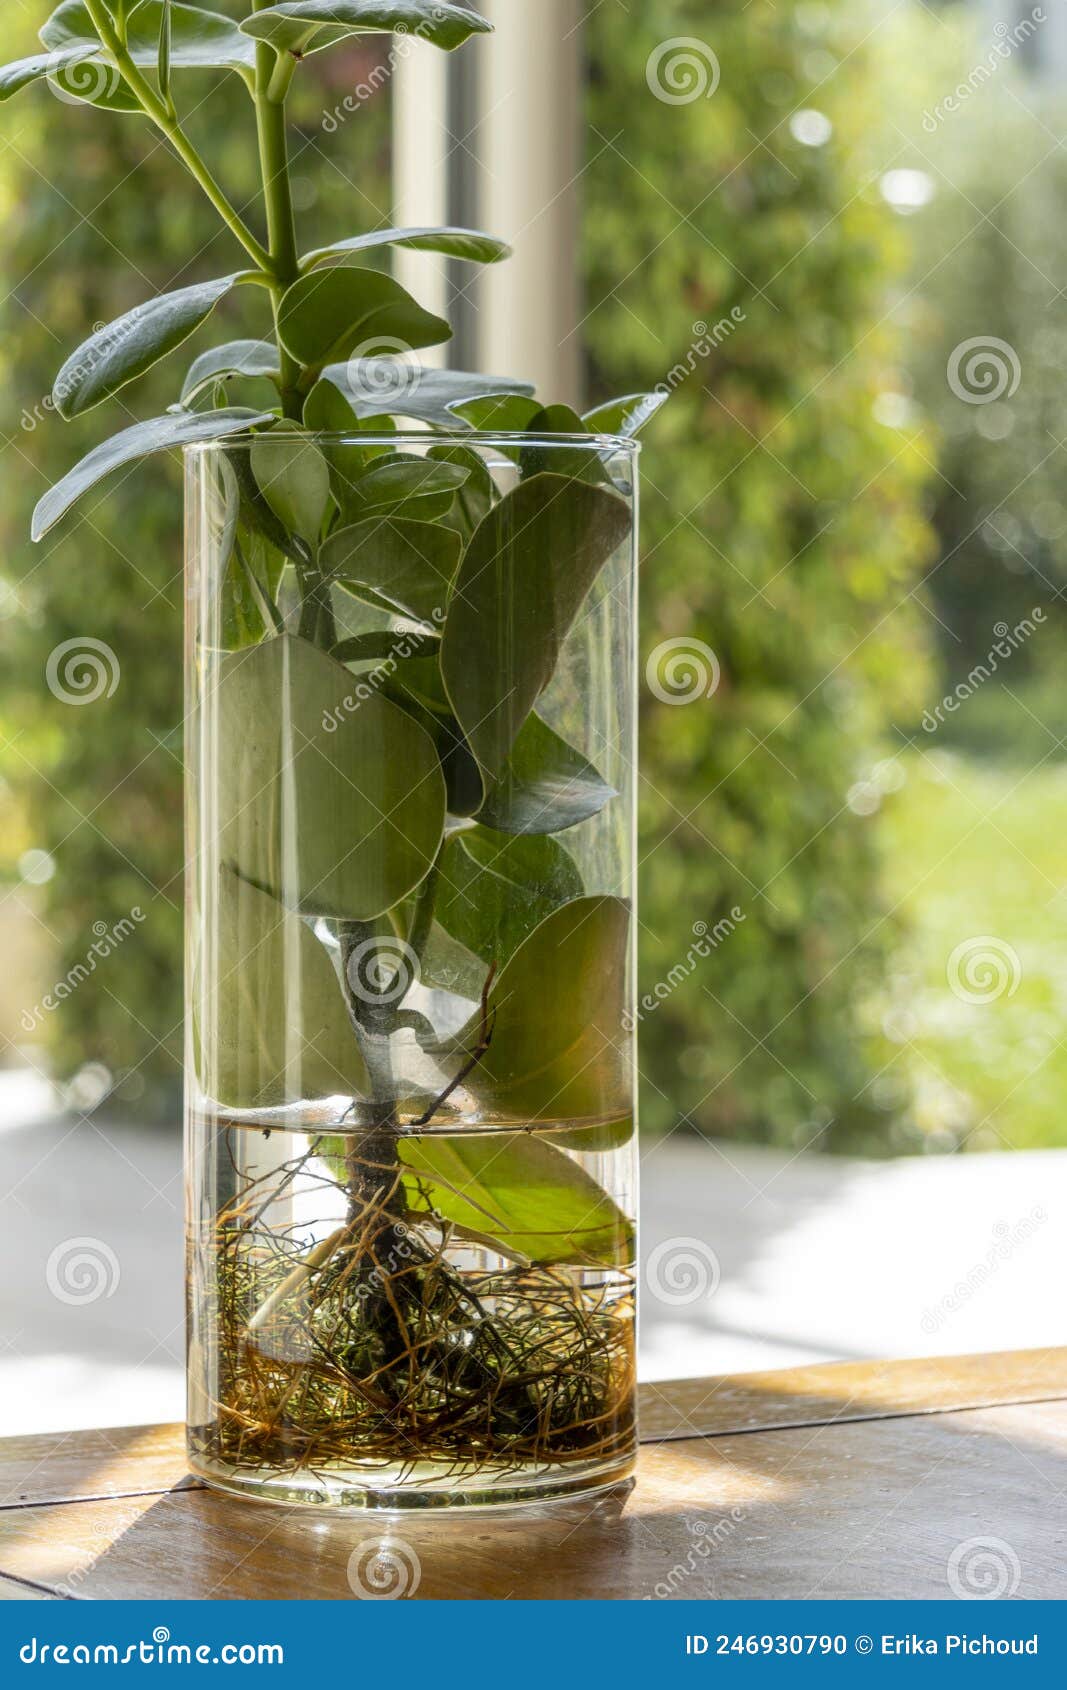 jolie clusier, succulent green indoor plant, in a vase revealing its roots